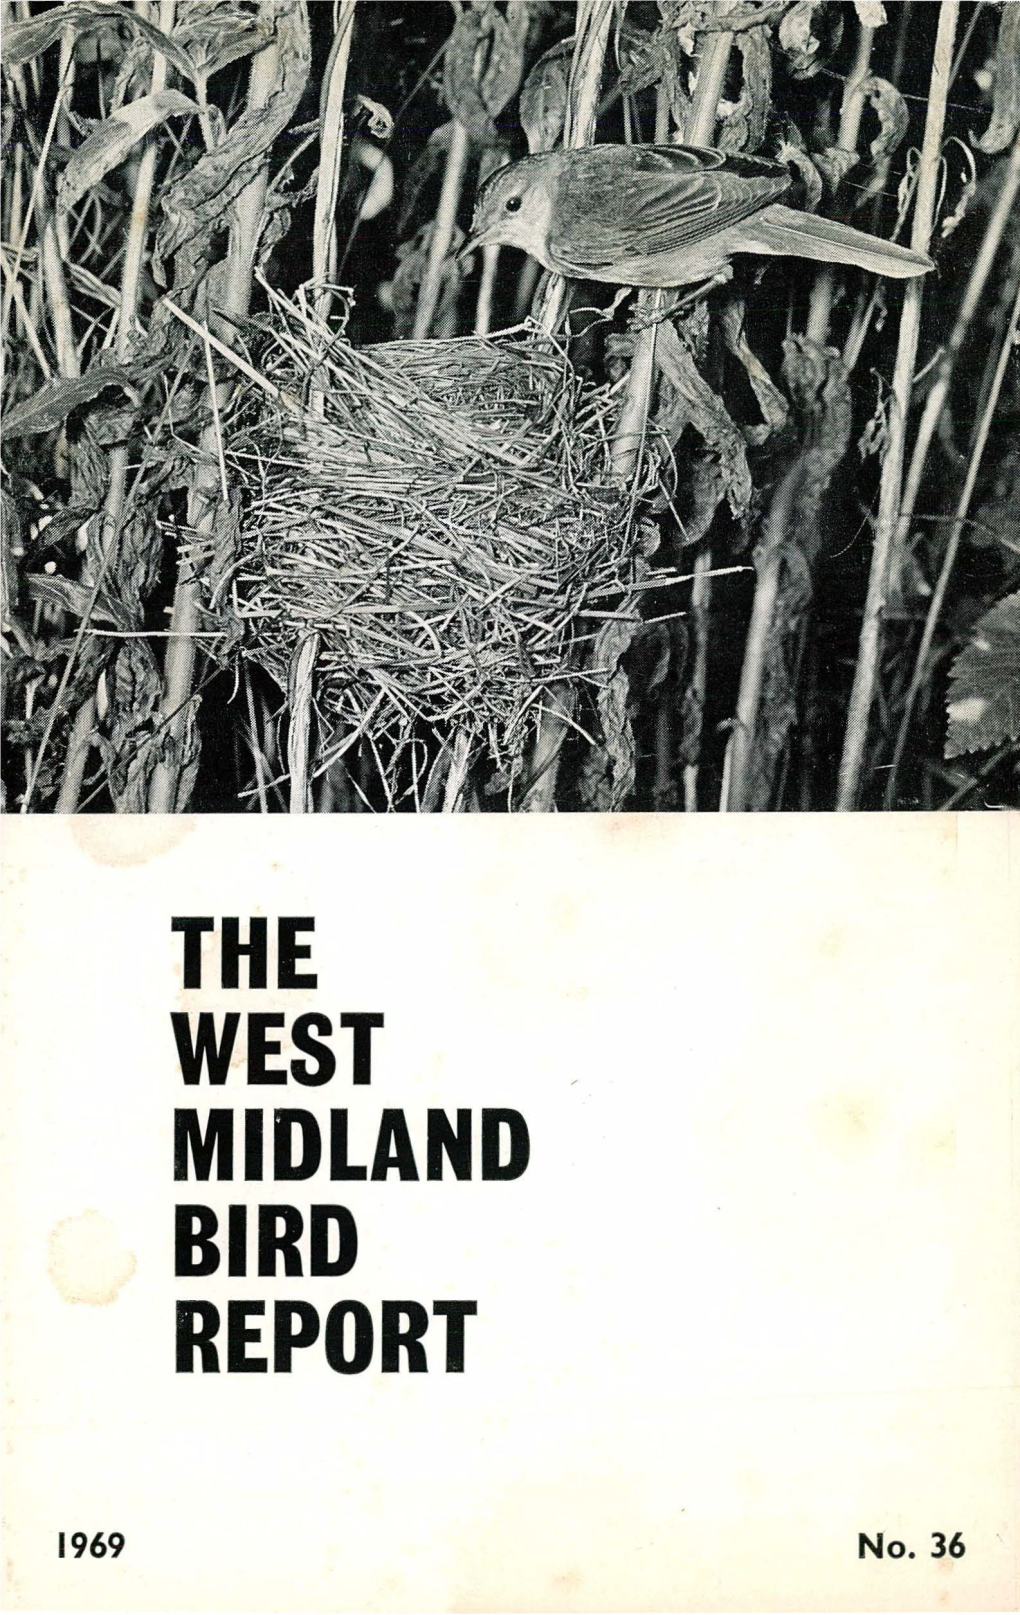 The West Midland Bird Report